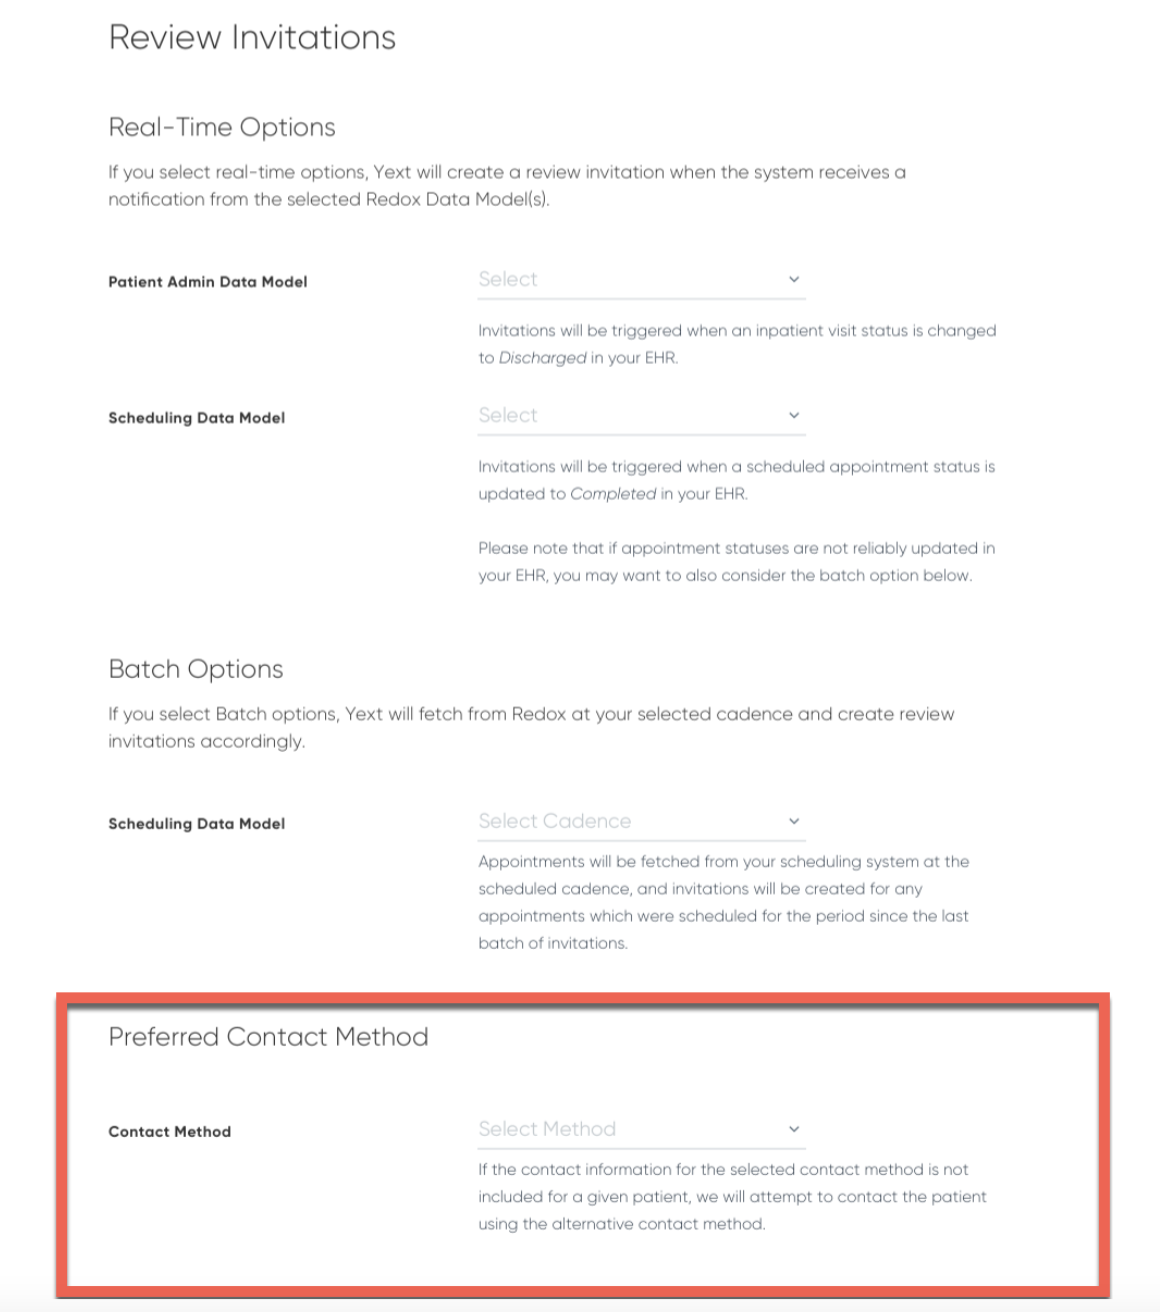 redox review invitations configuration screen